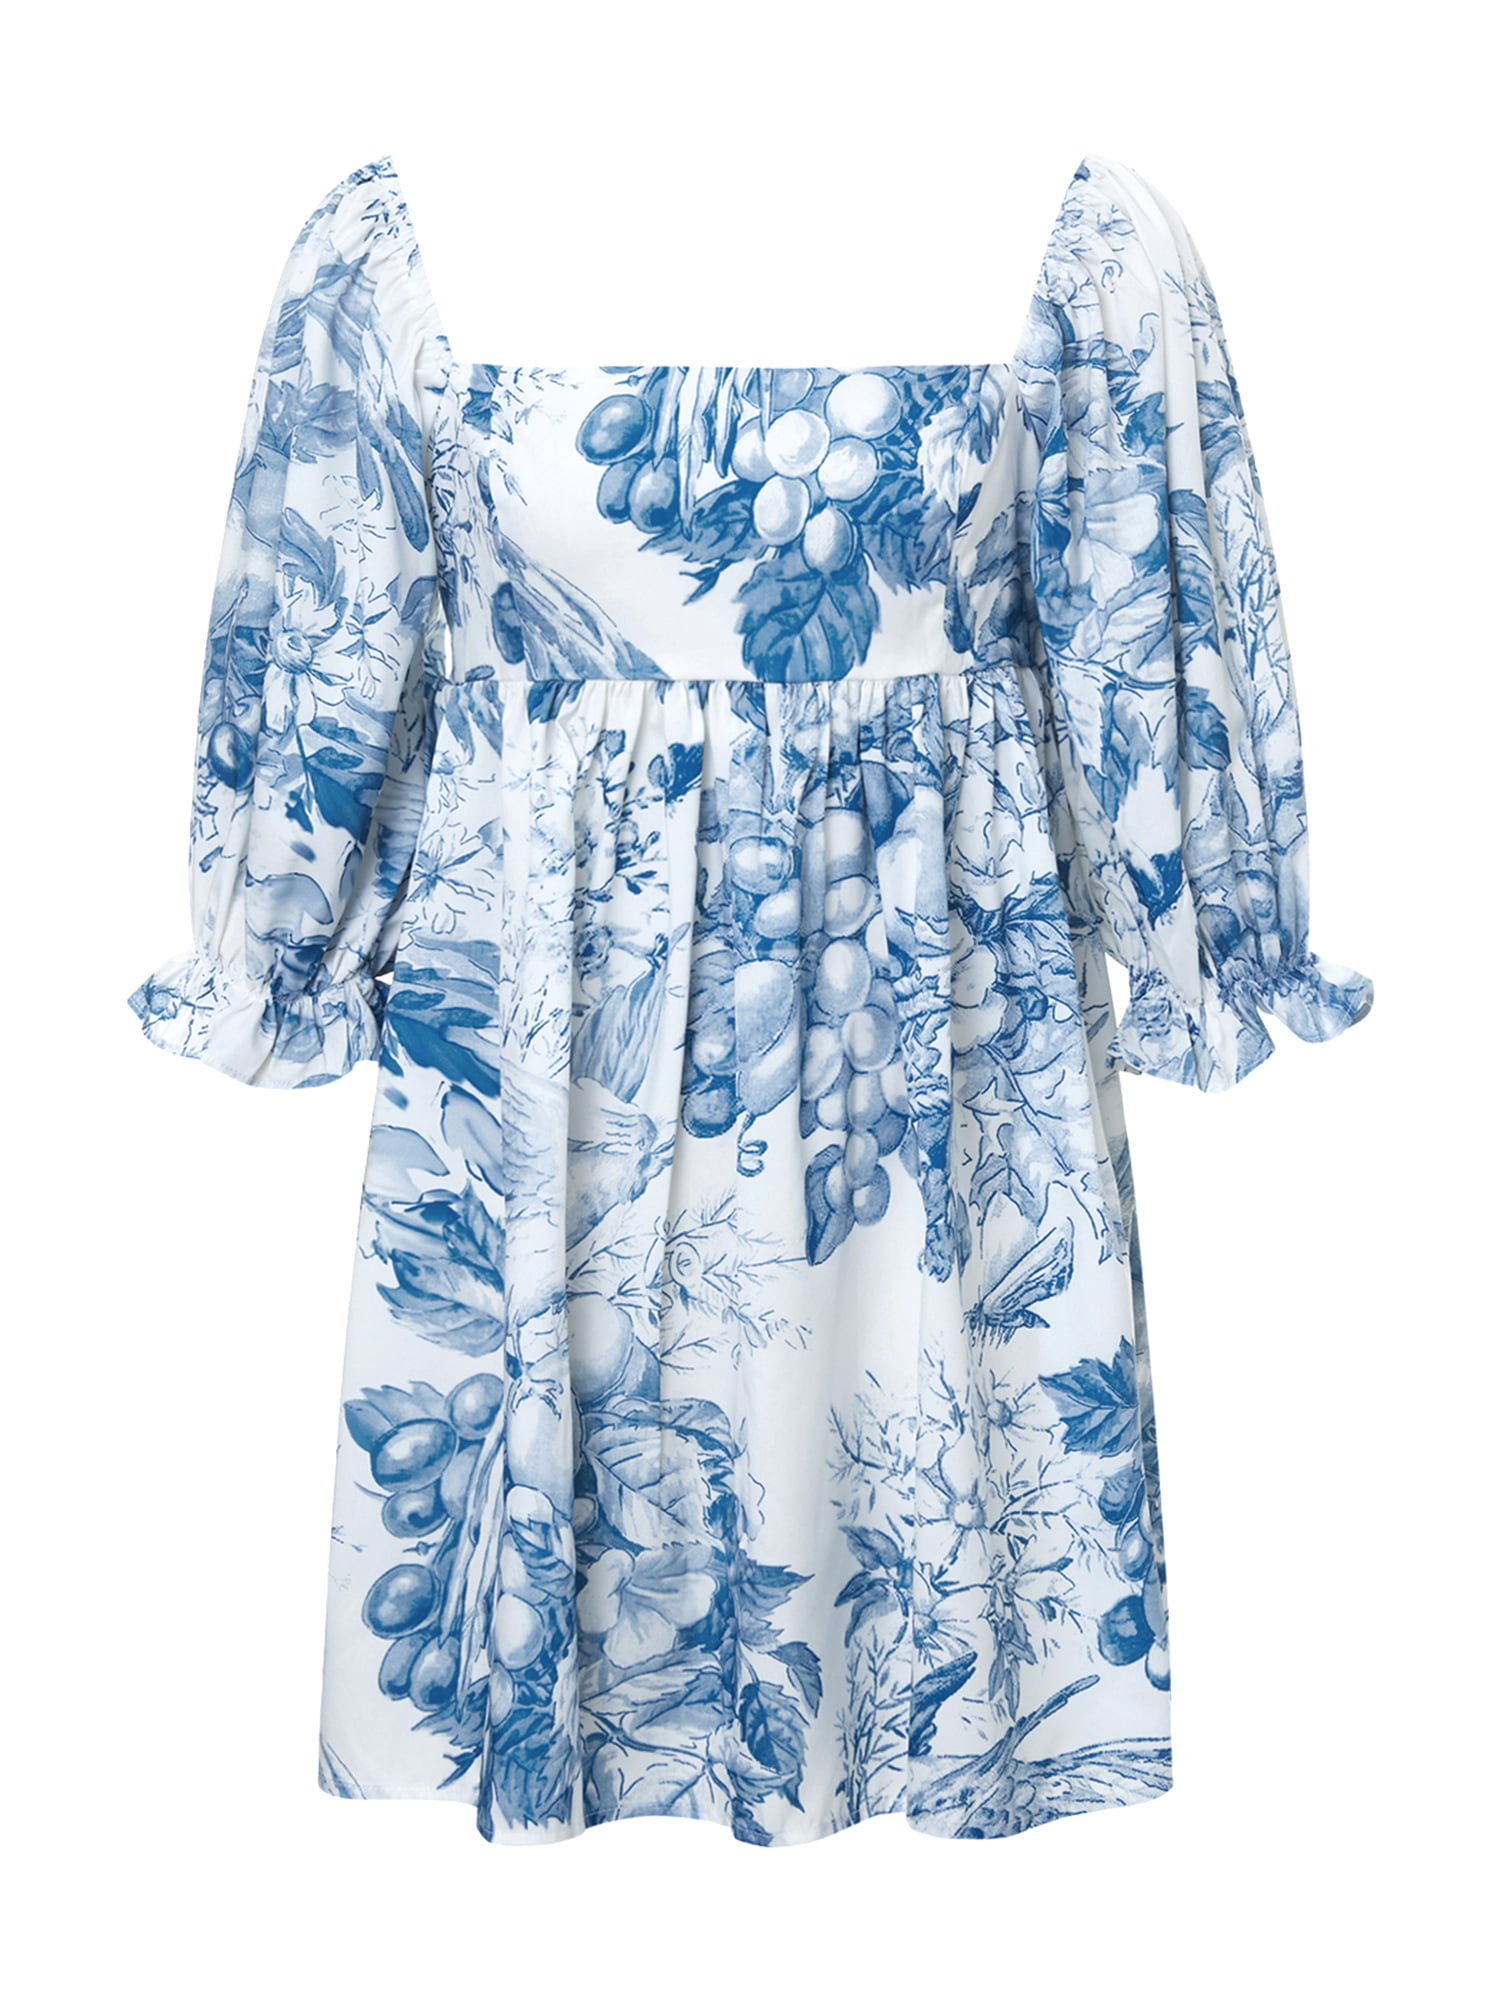 wybzd Women's Summer Floral Printing/Tie-dye Print Puff Sleeve